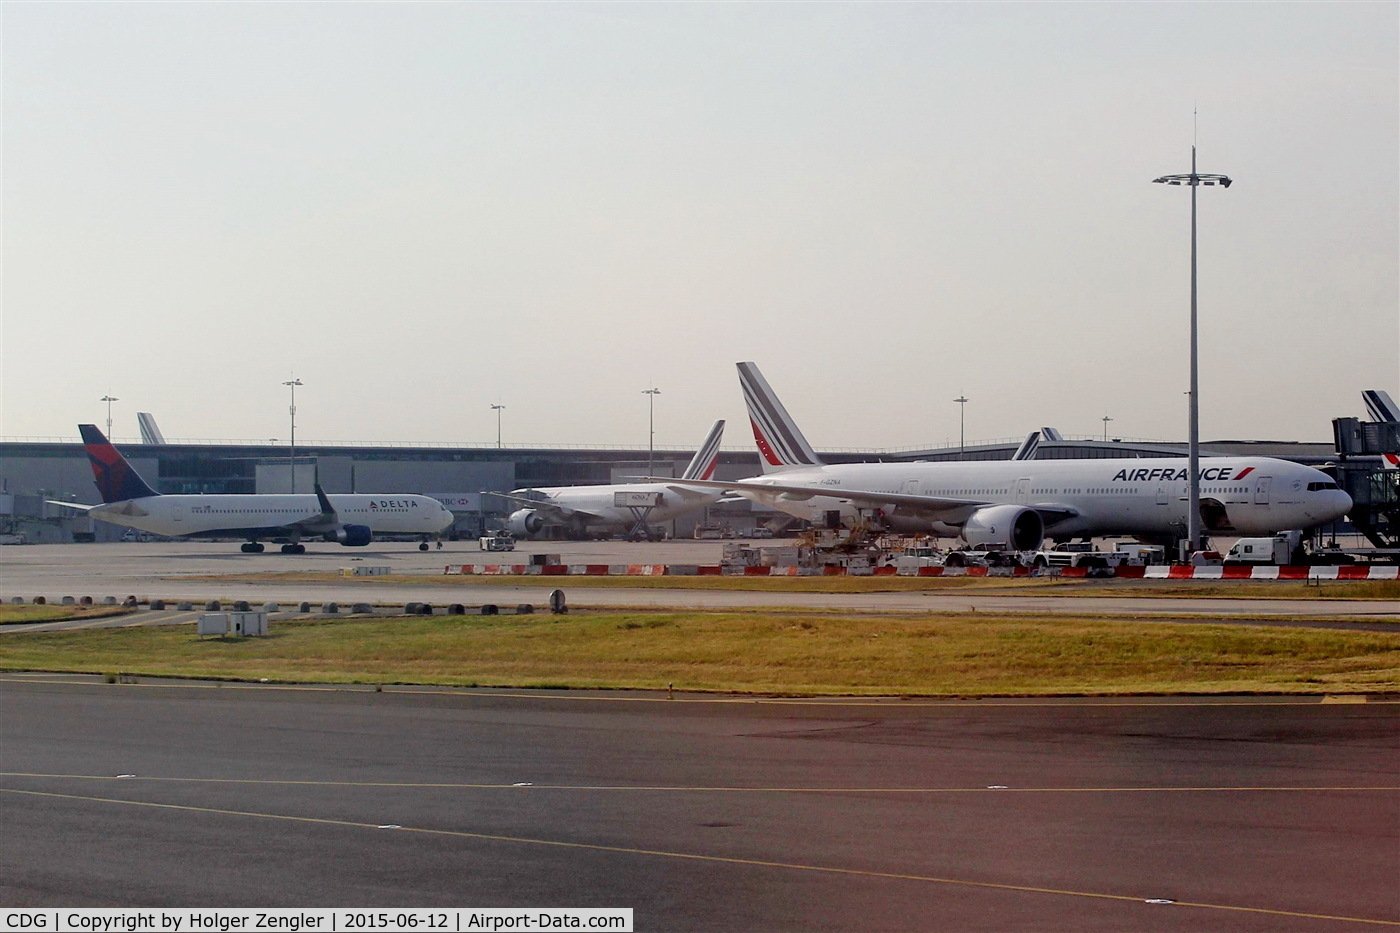 Paris Charles de Gaulle Airport (Roissy Airport), Paris France (CDG) - Stopover impressions...